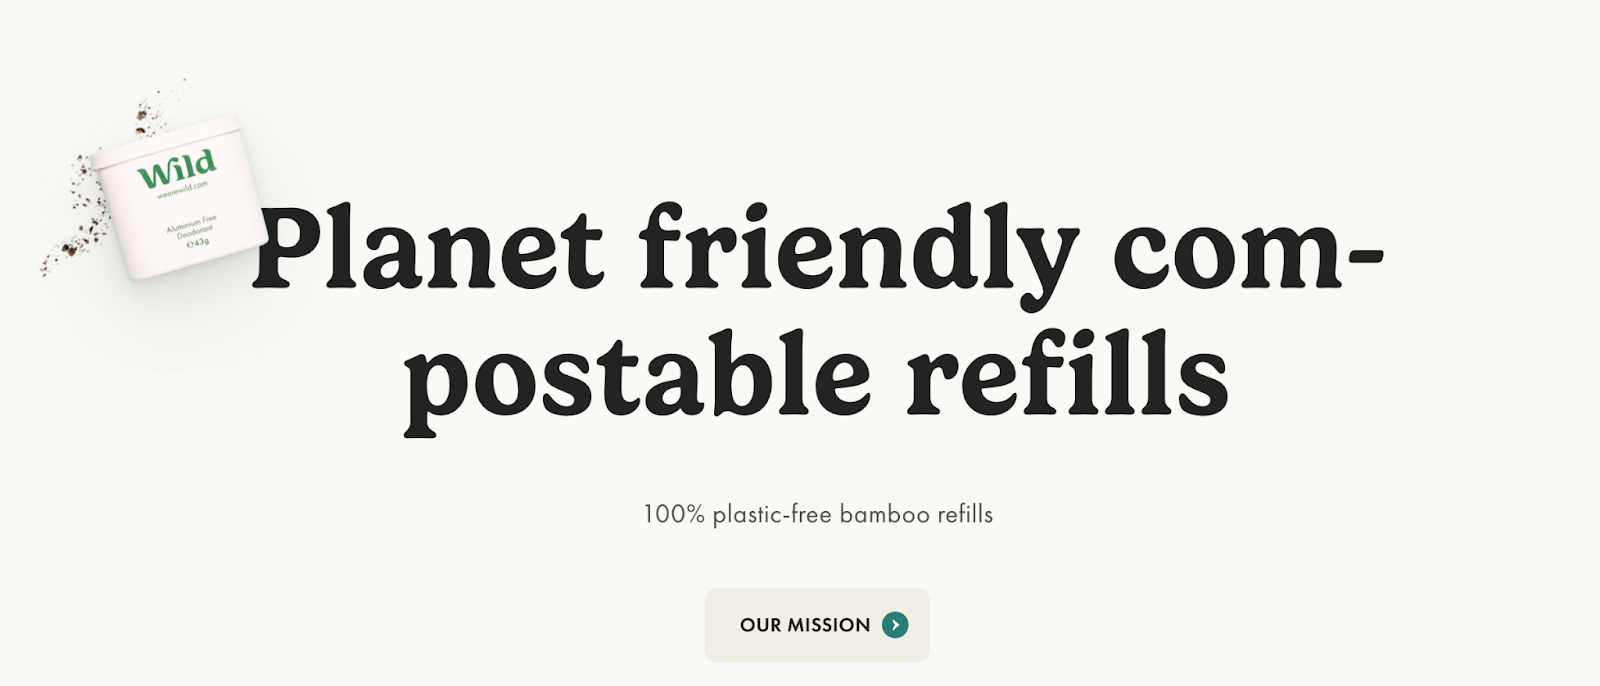 "Planet friendly com-postable refills" Wild